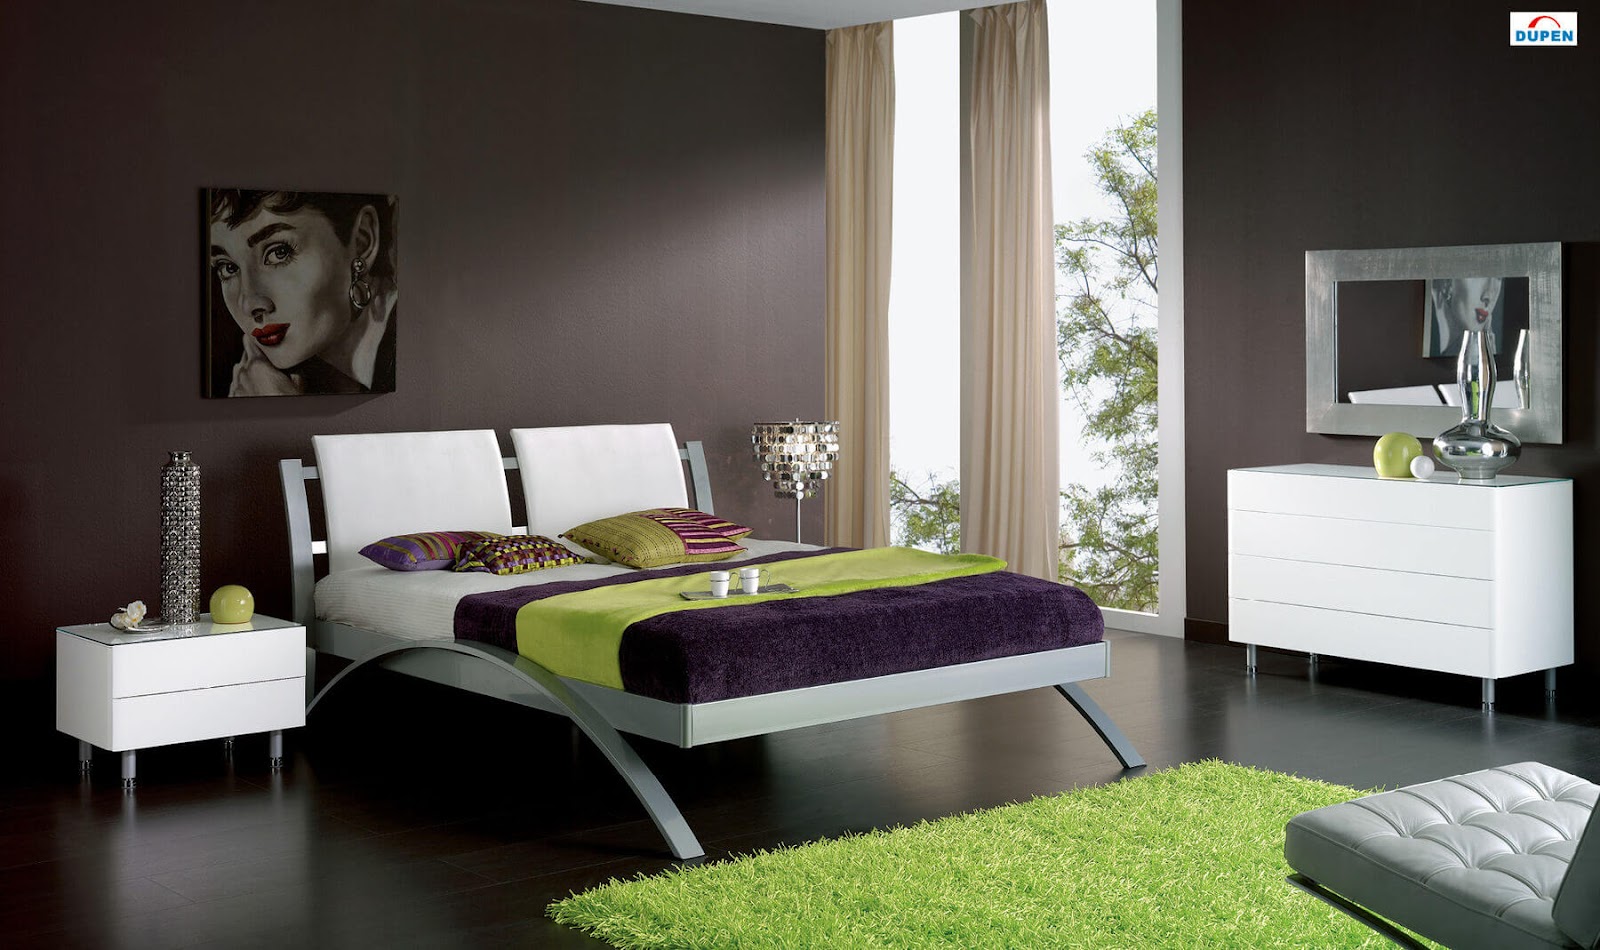  Kerala bedroom design